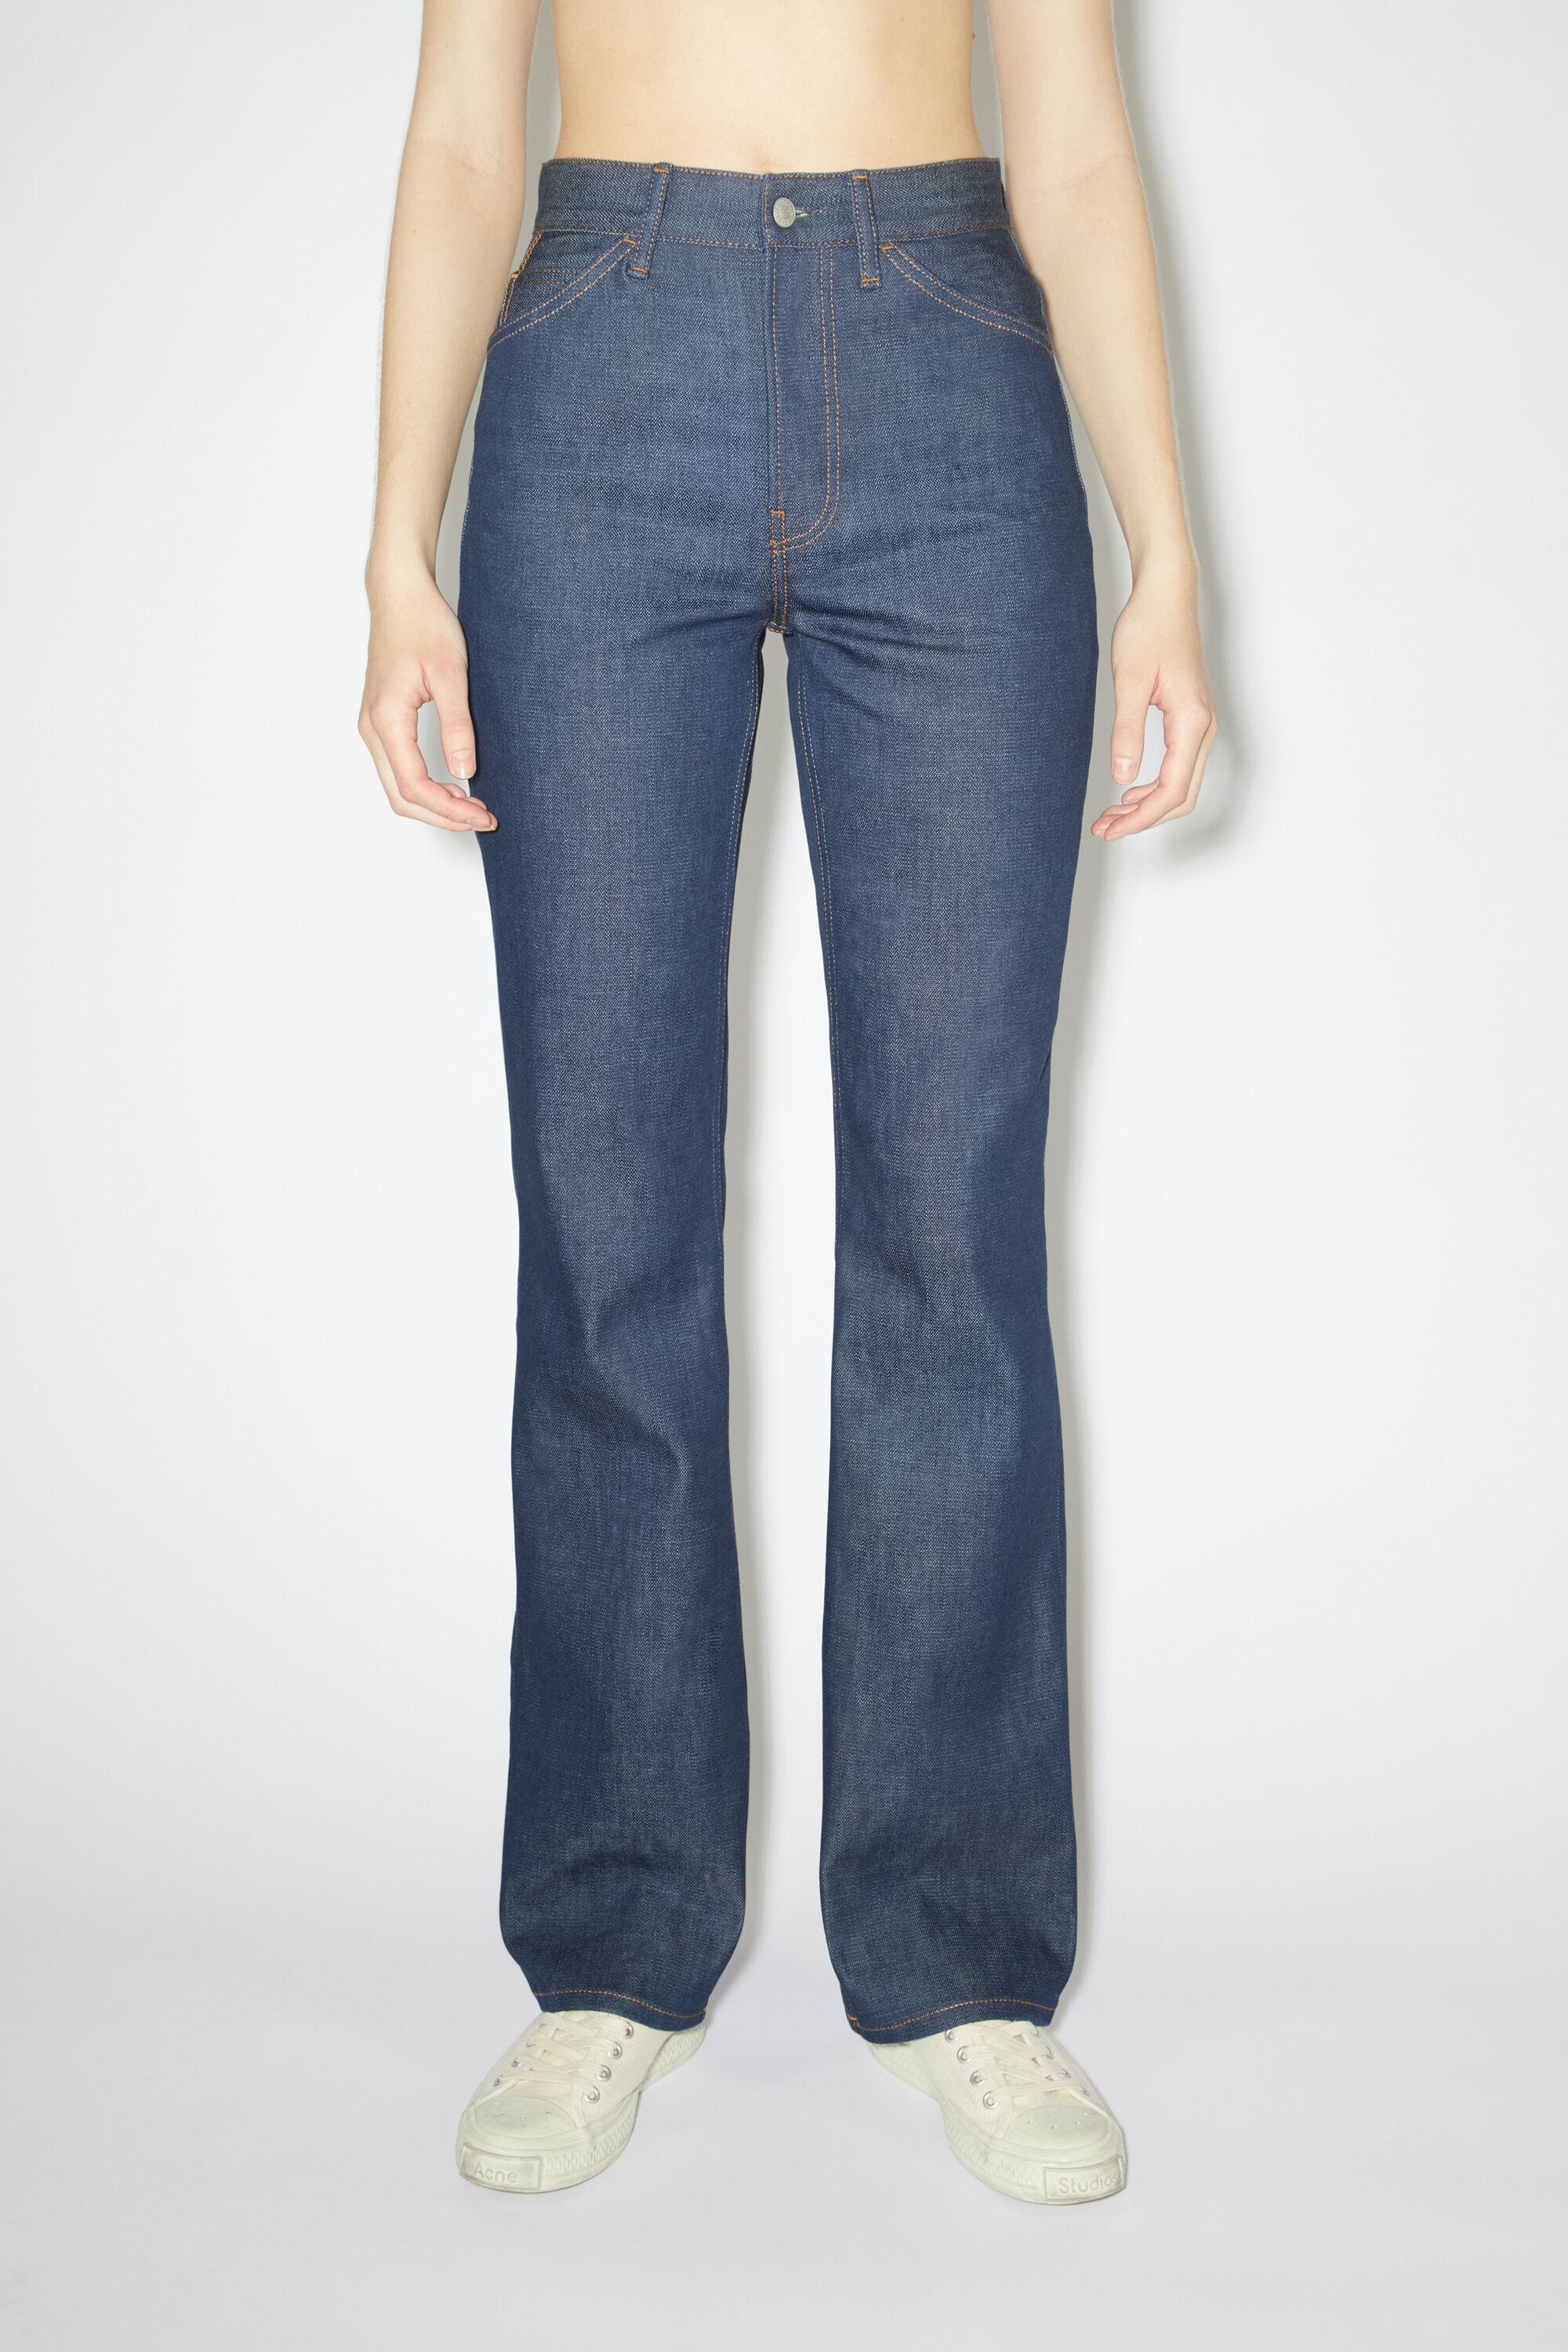 Regular fit jeans - 1977 - Indigo blue - 2